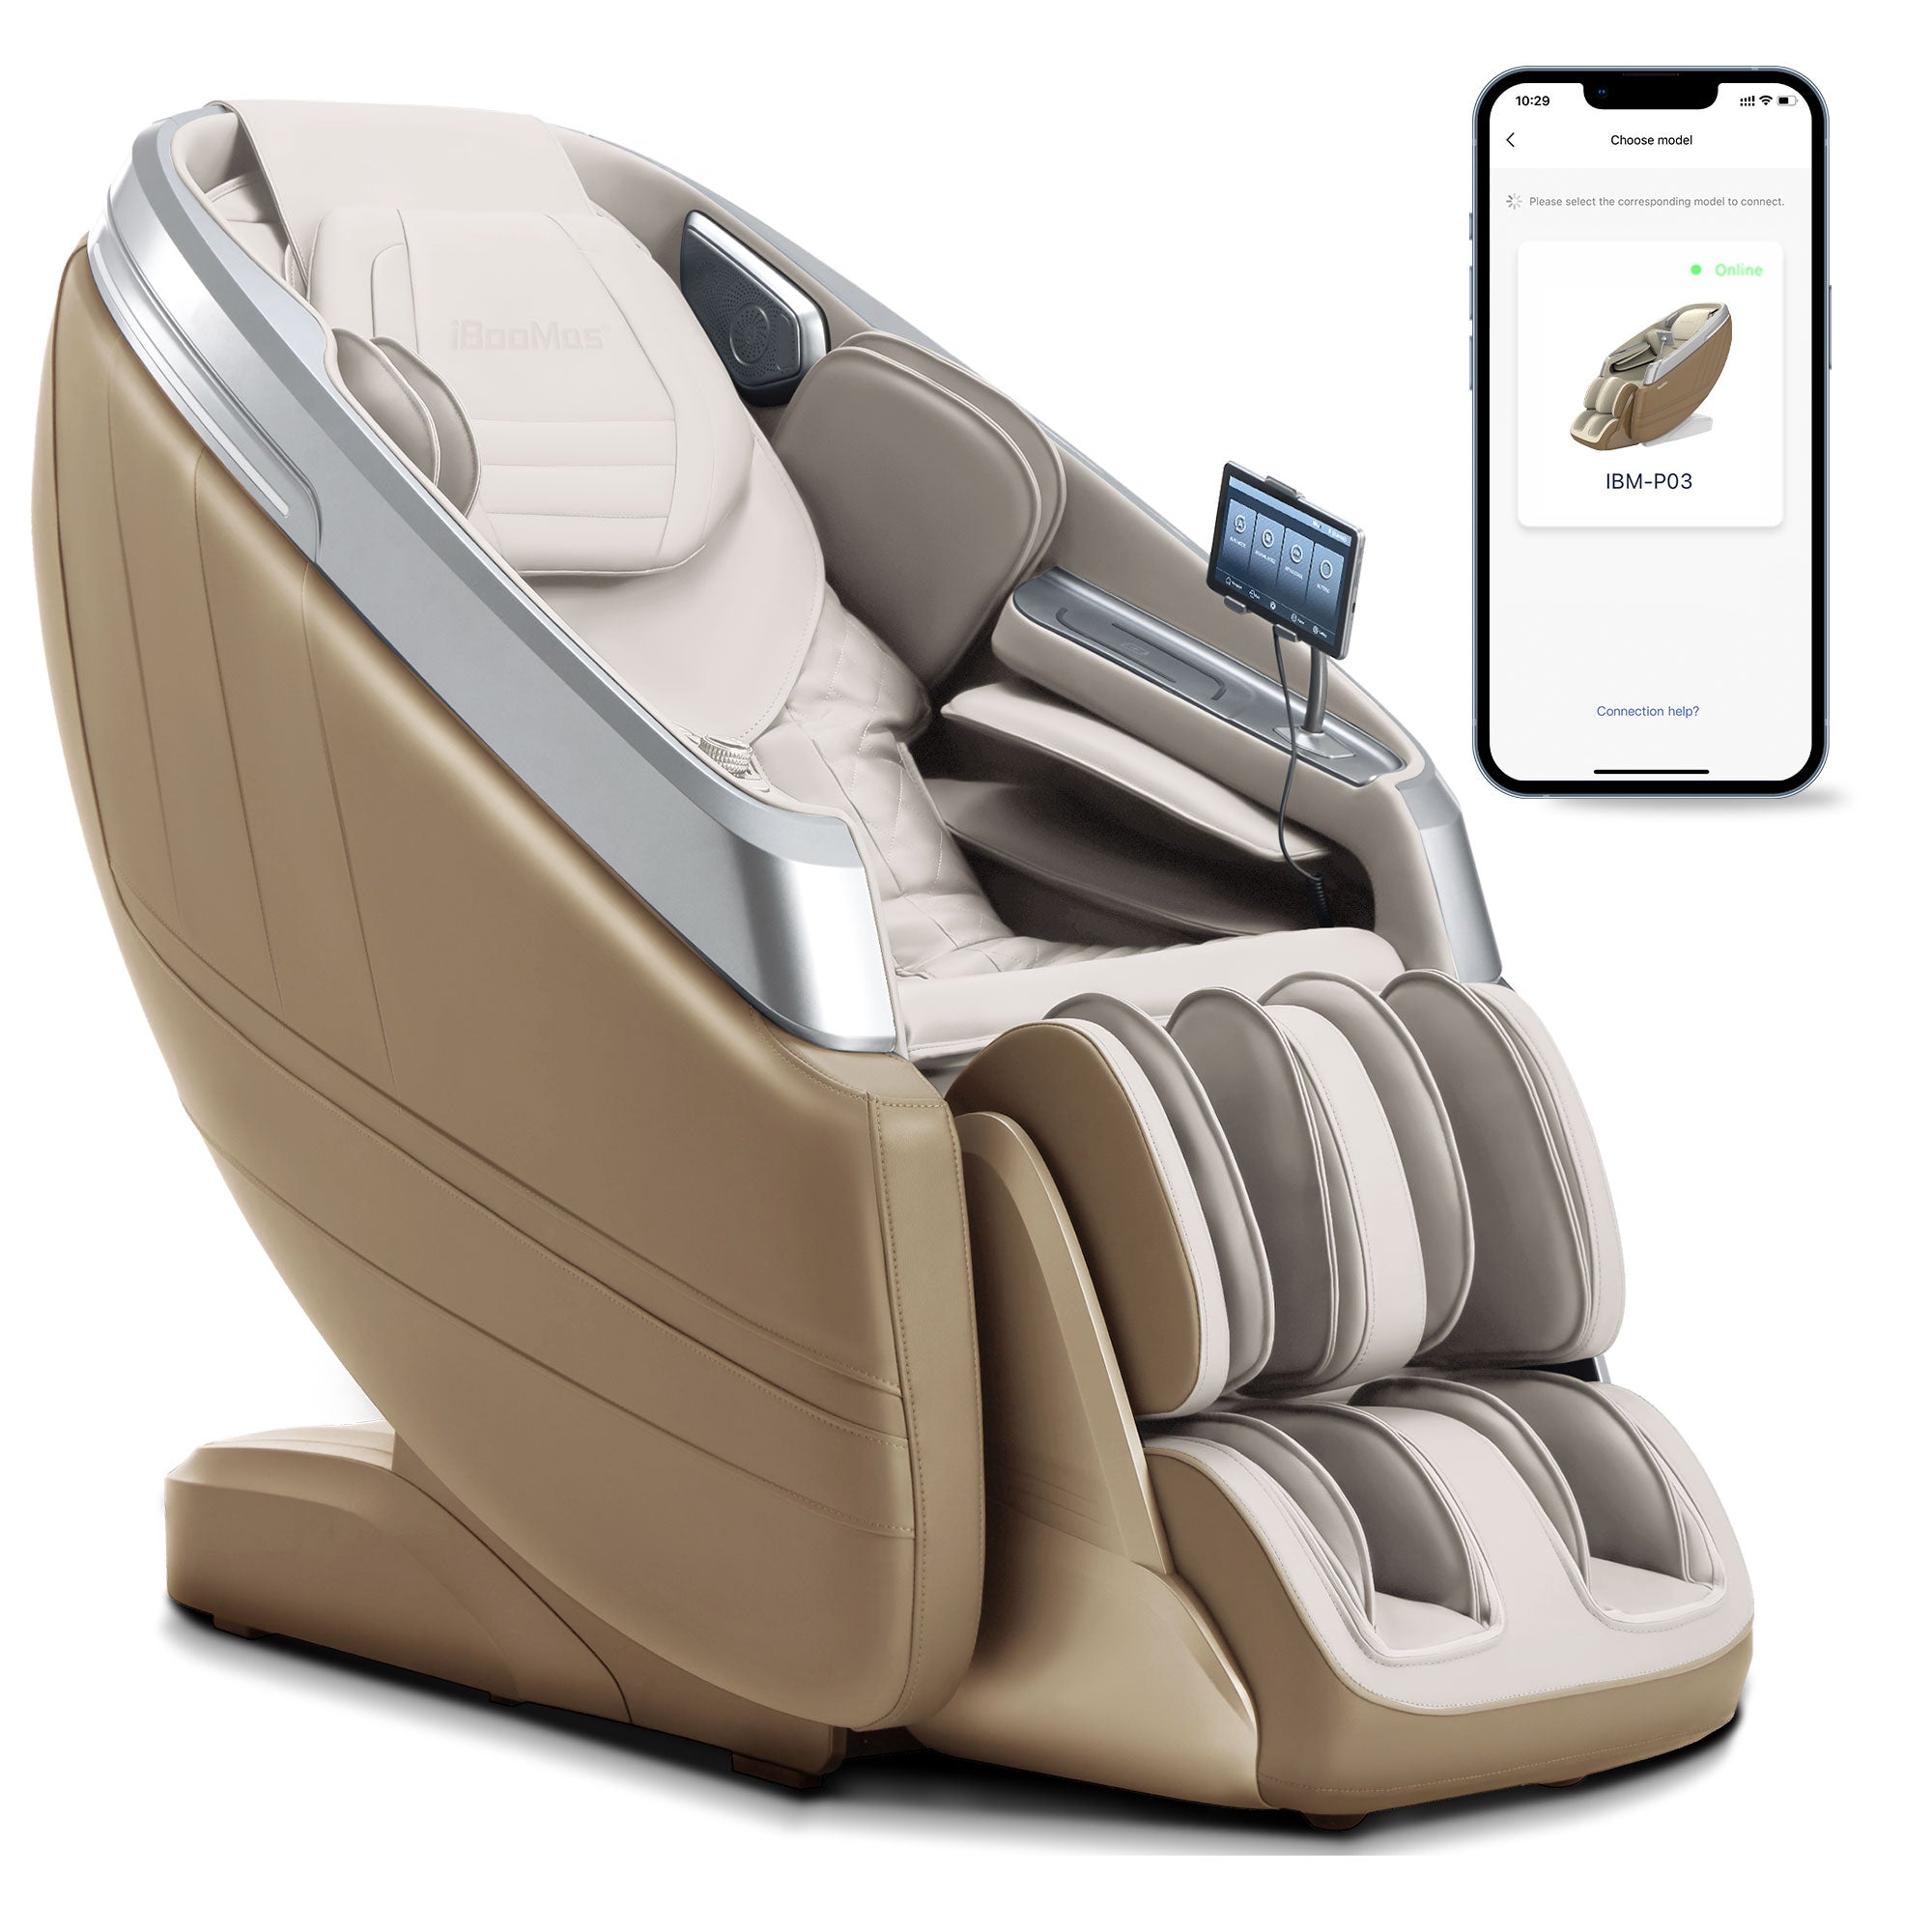 Cockpit-like 4D Hyper Tech Therapeutic Massage Chair - Under $3000 